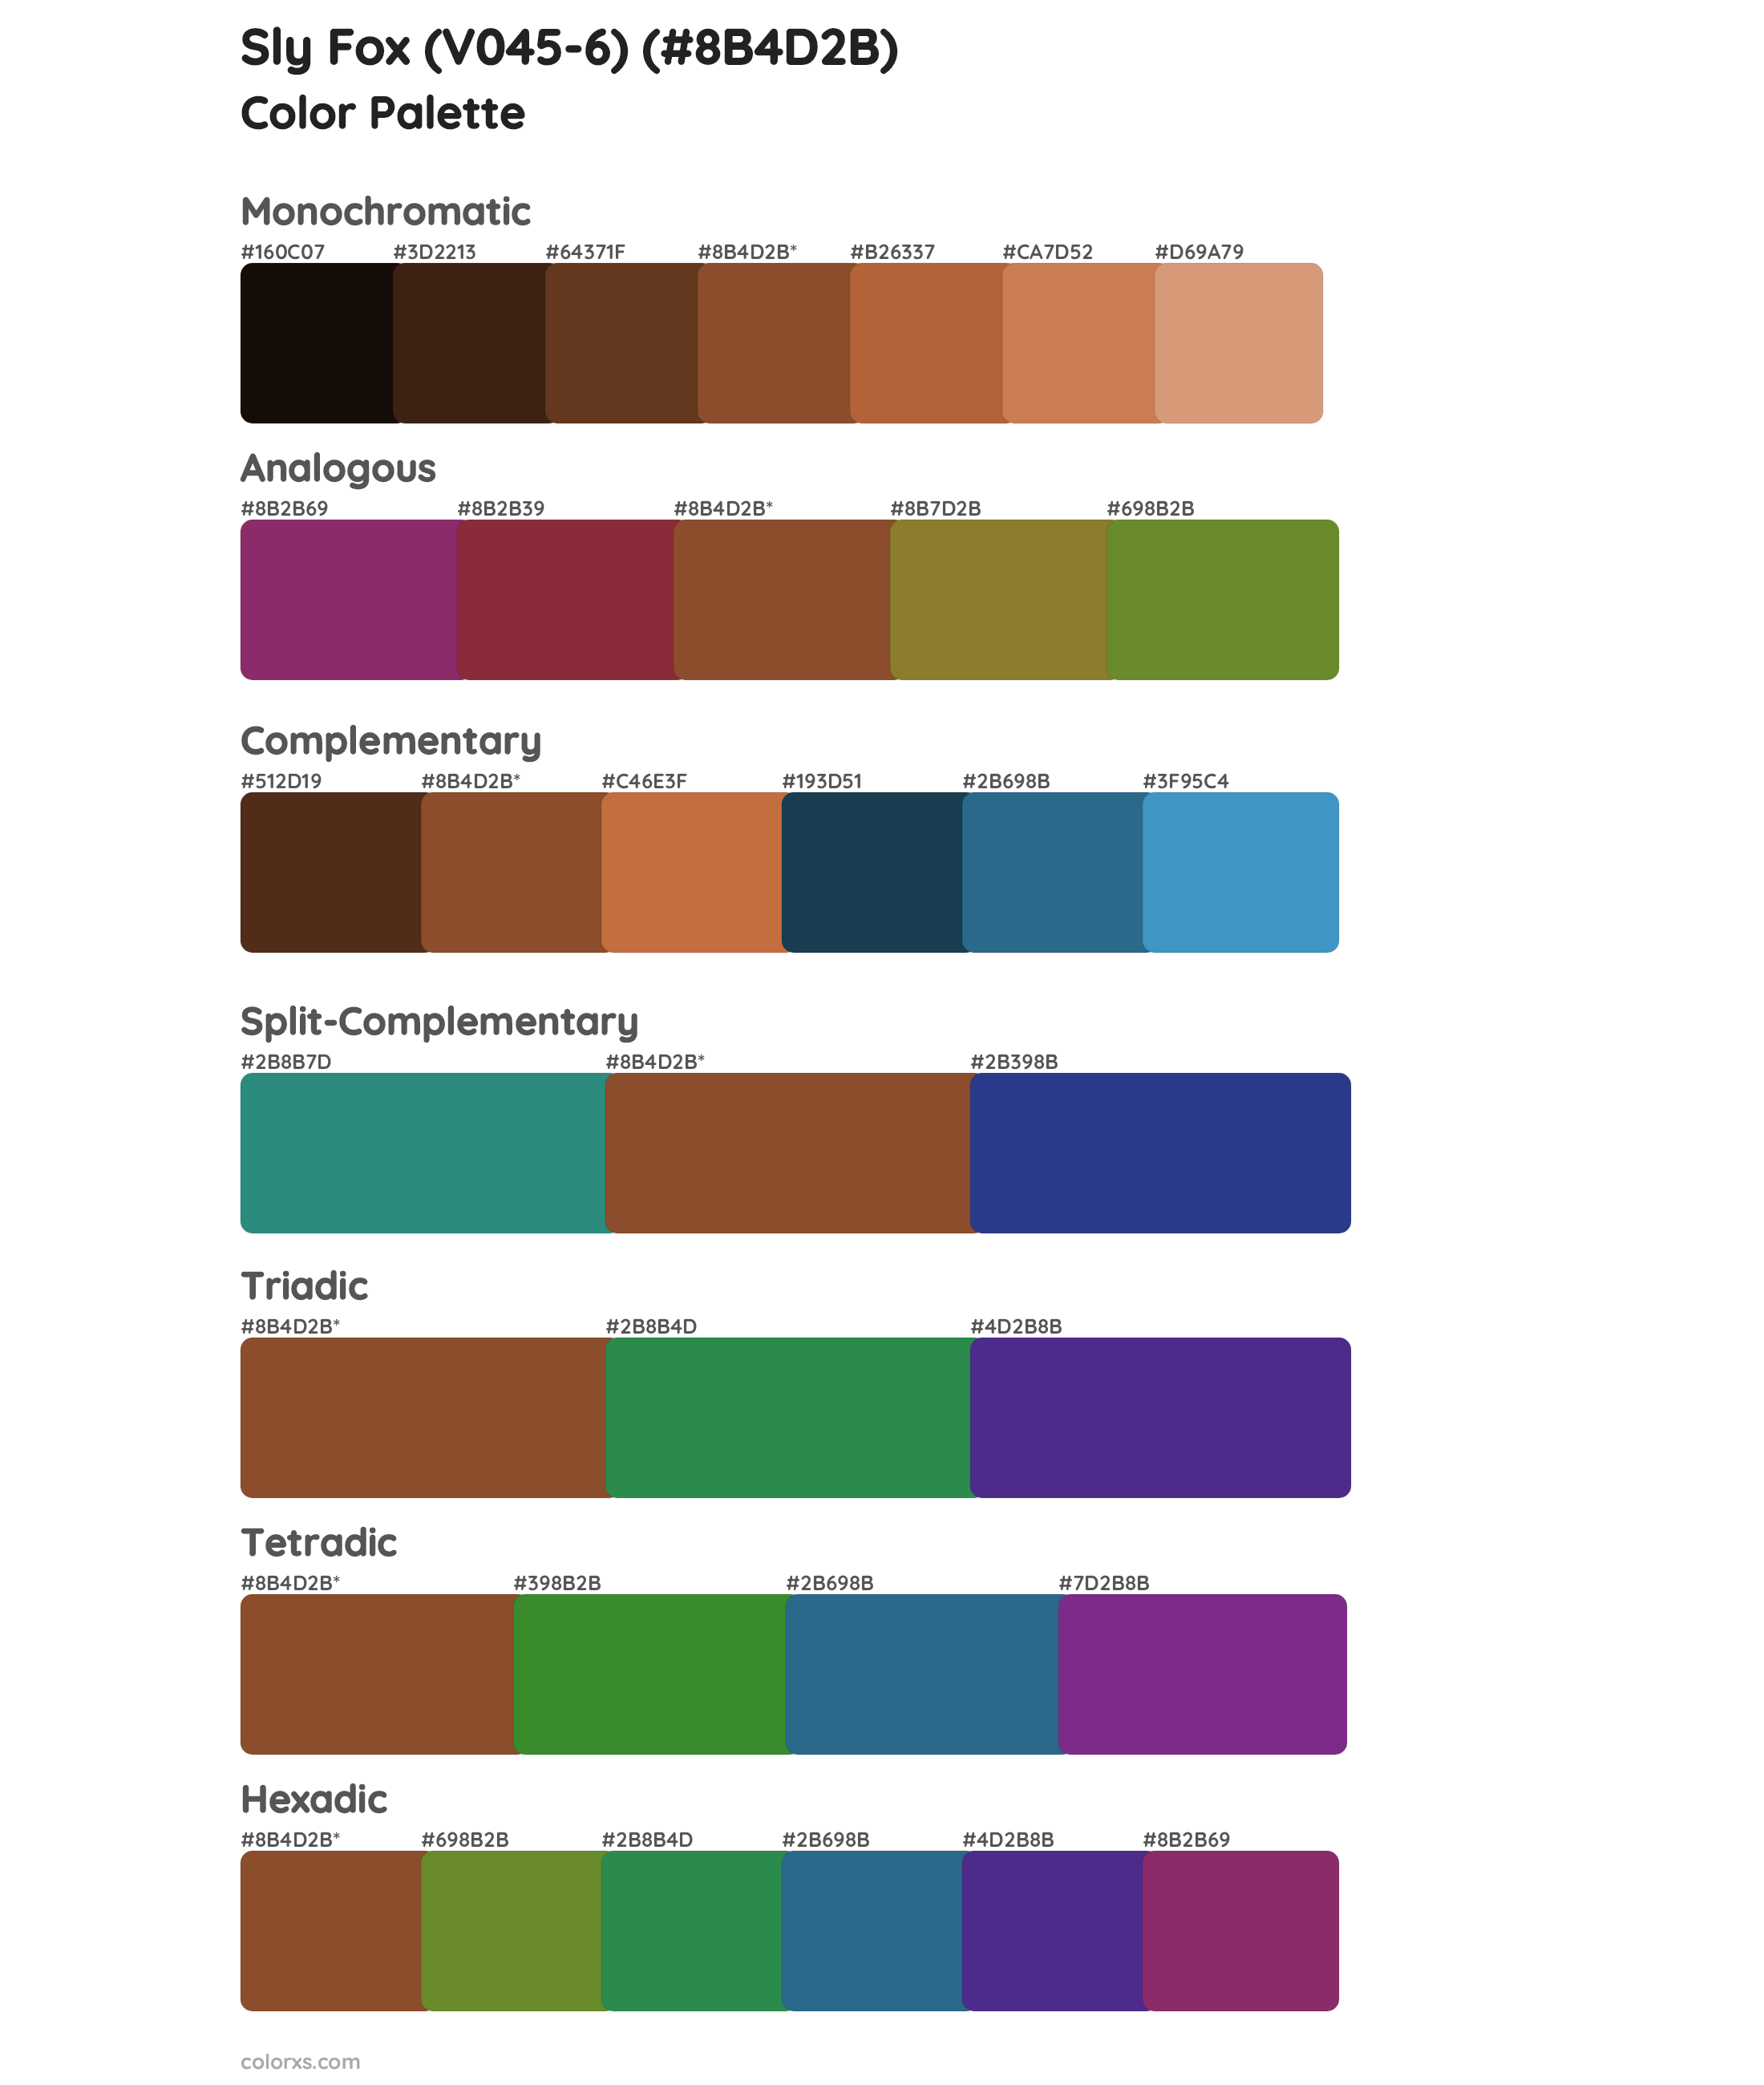 Sly Fox (V045-6) Color Scheme Palettes